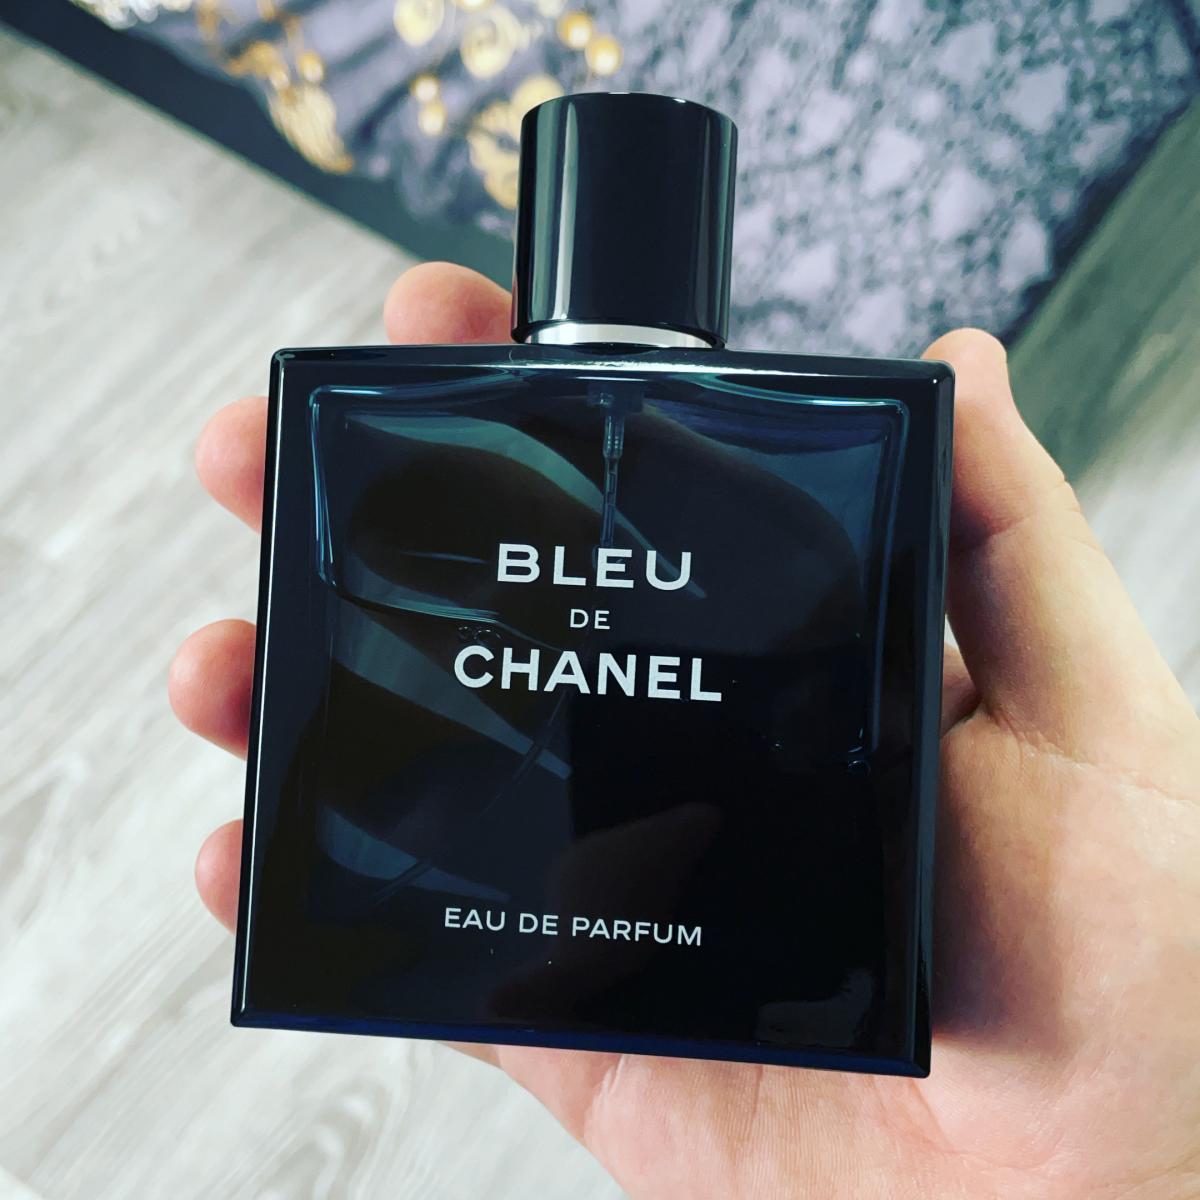 Bleu de Chanel Eau de Parfum Chanel одеколон — аромат для мужчин 2014